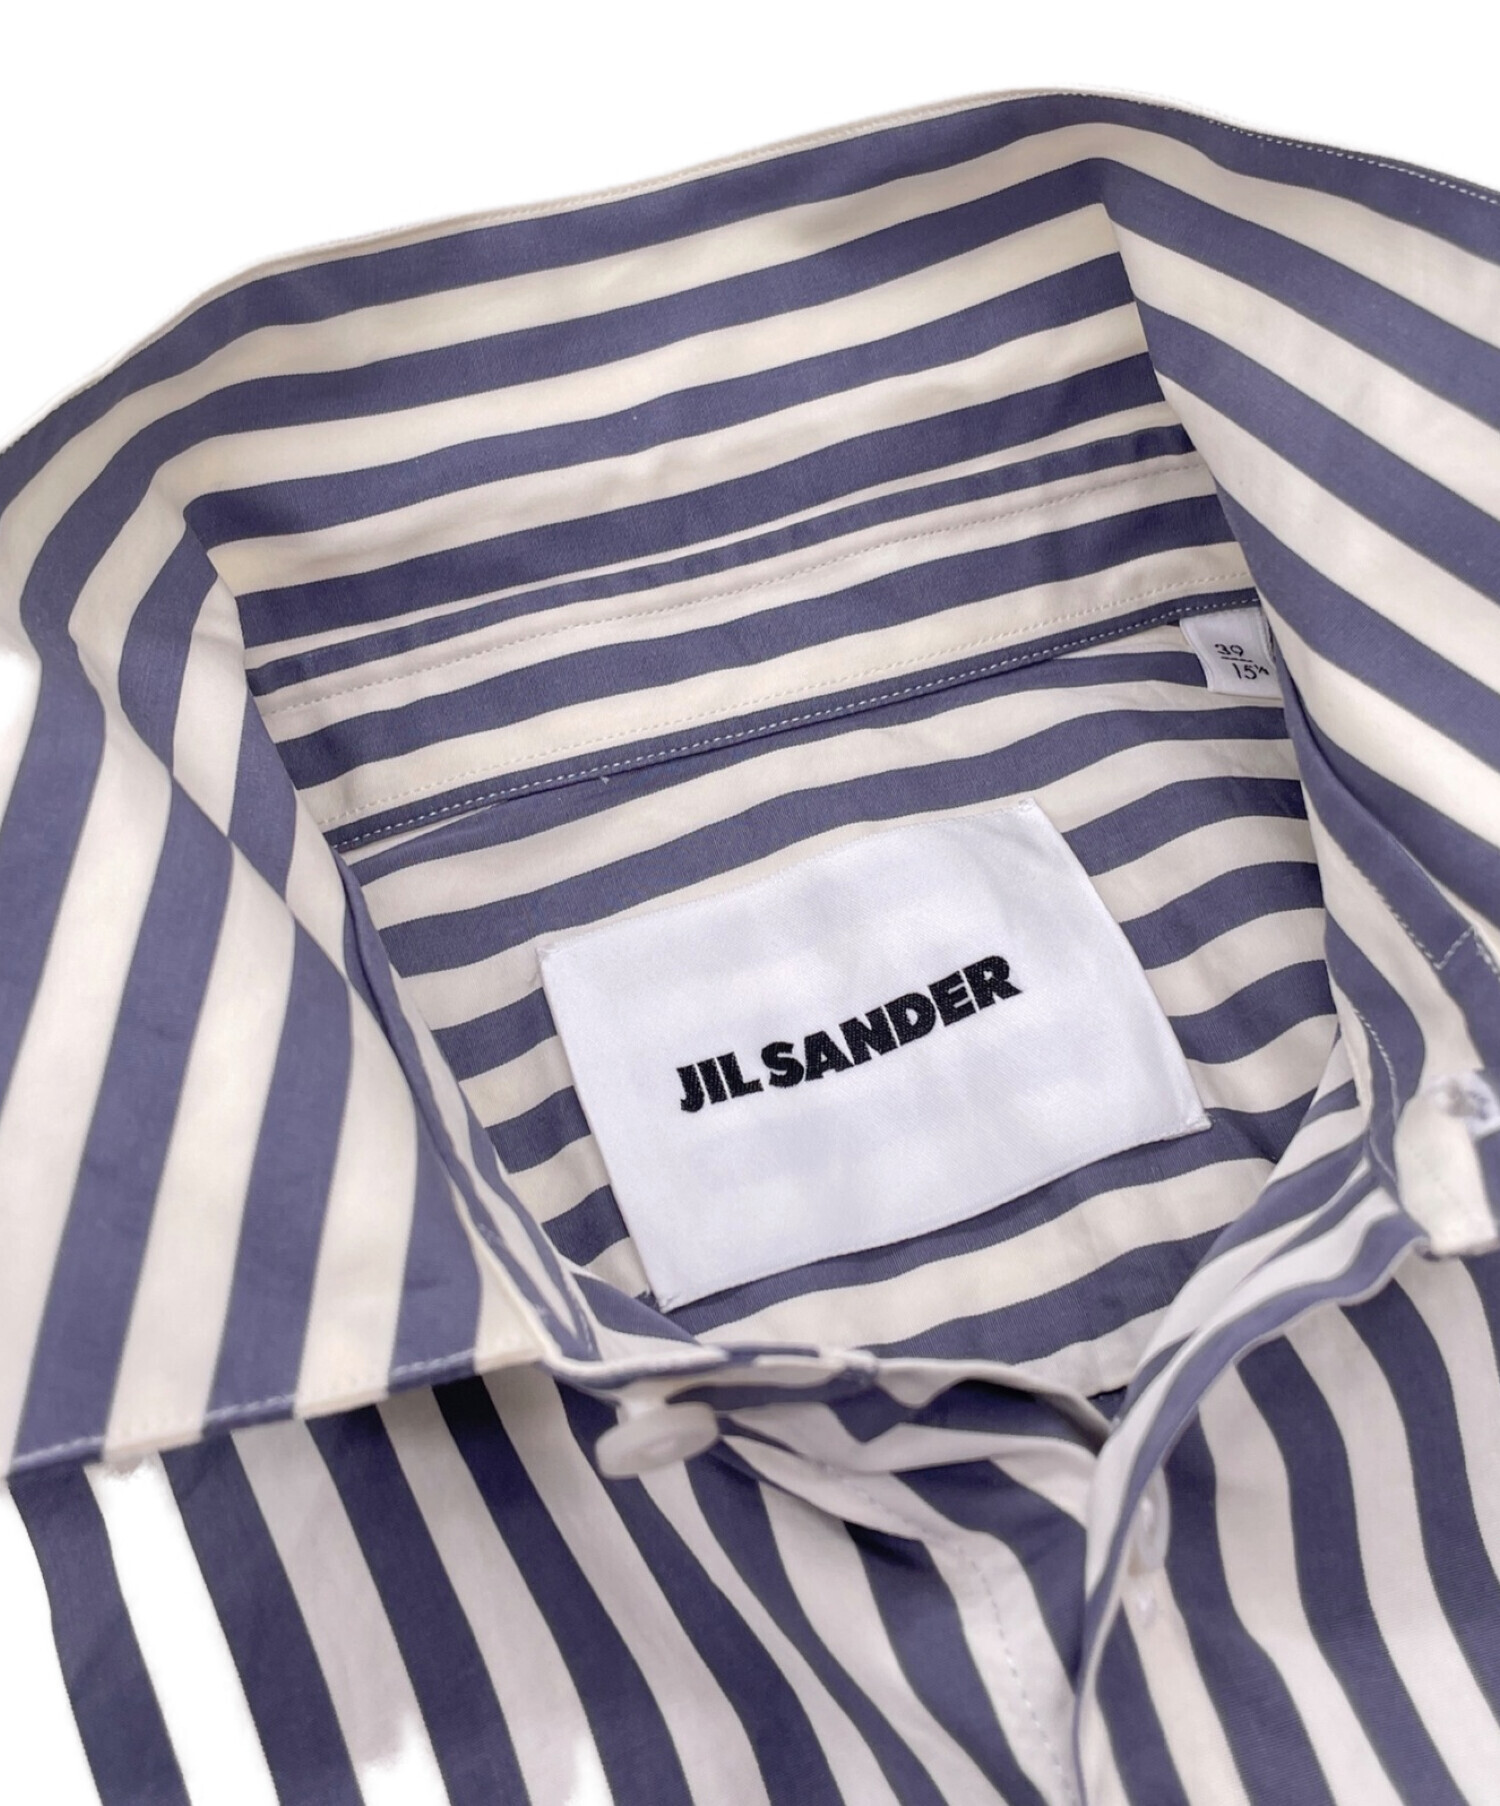 JIL SANDER (ジルサンダー) オーバーサイズストライプシャツ ホワイト×グレー サイズ:39